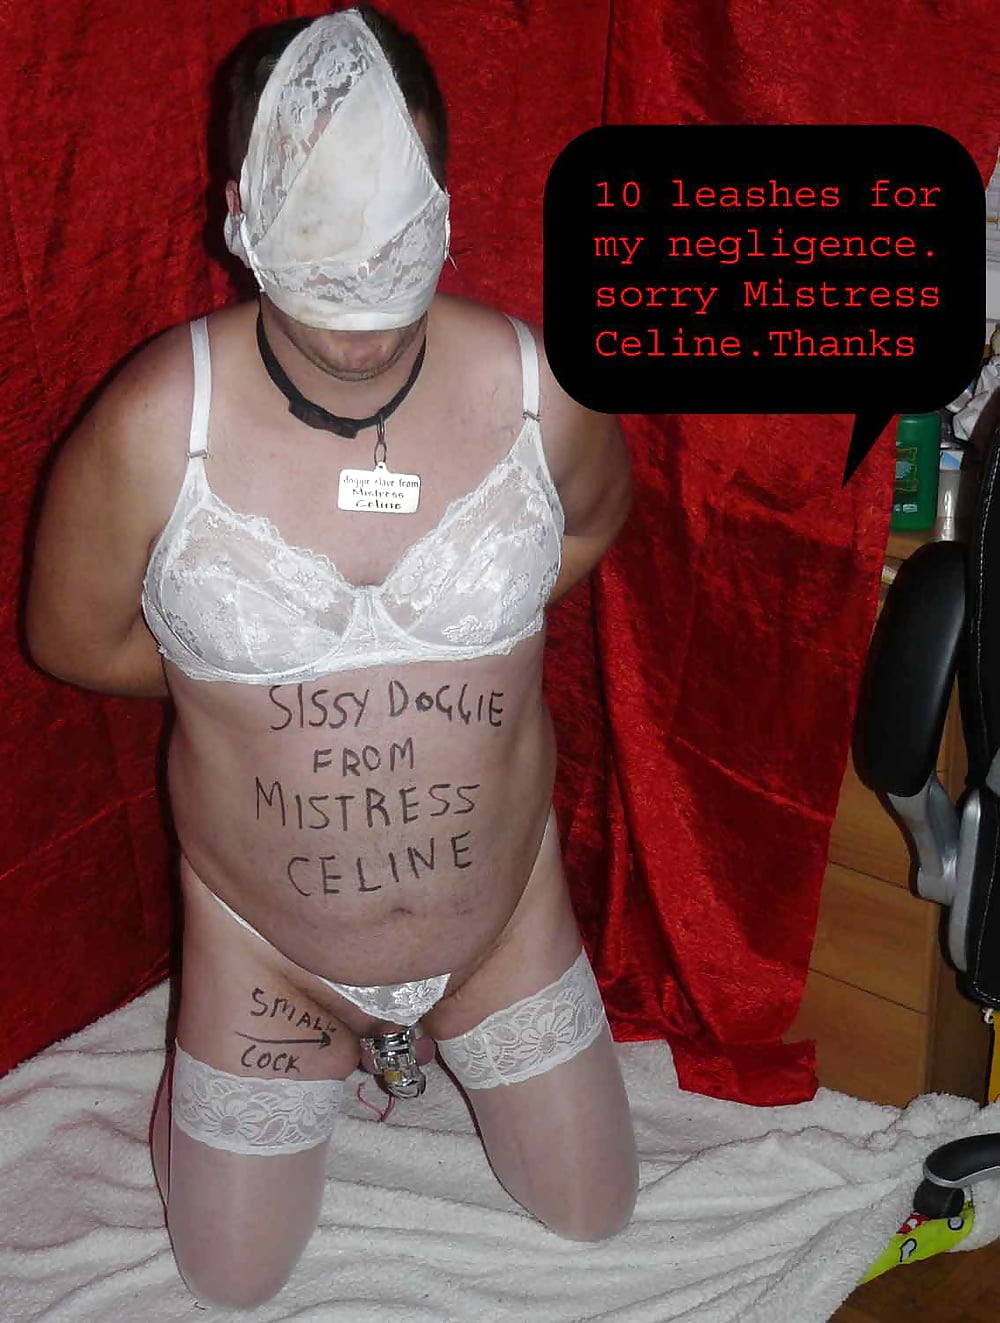 punished for my negligence. Thanks Mistress Celine #107329307